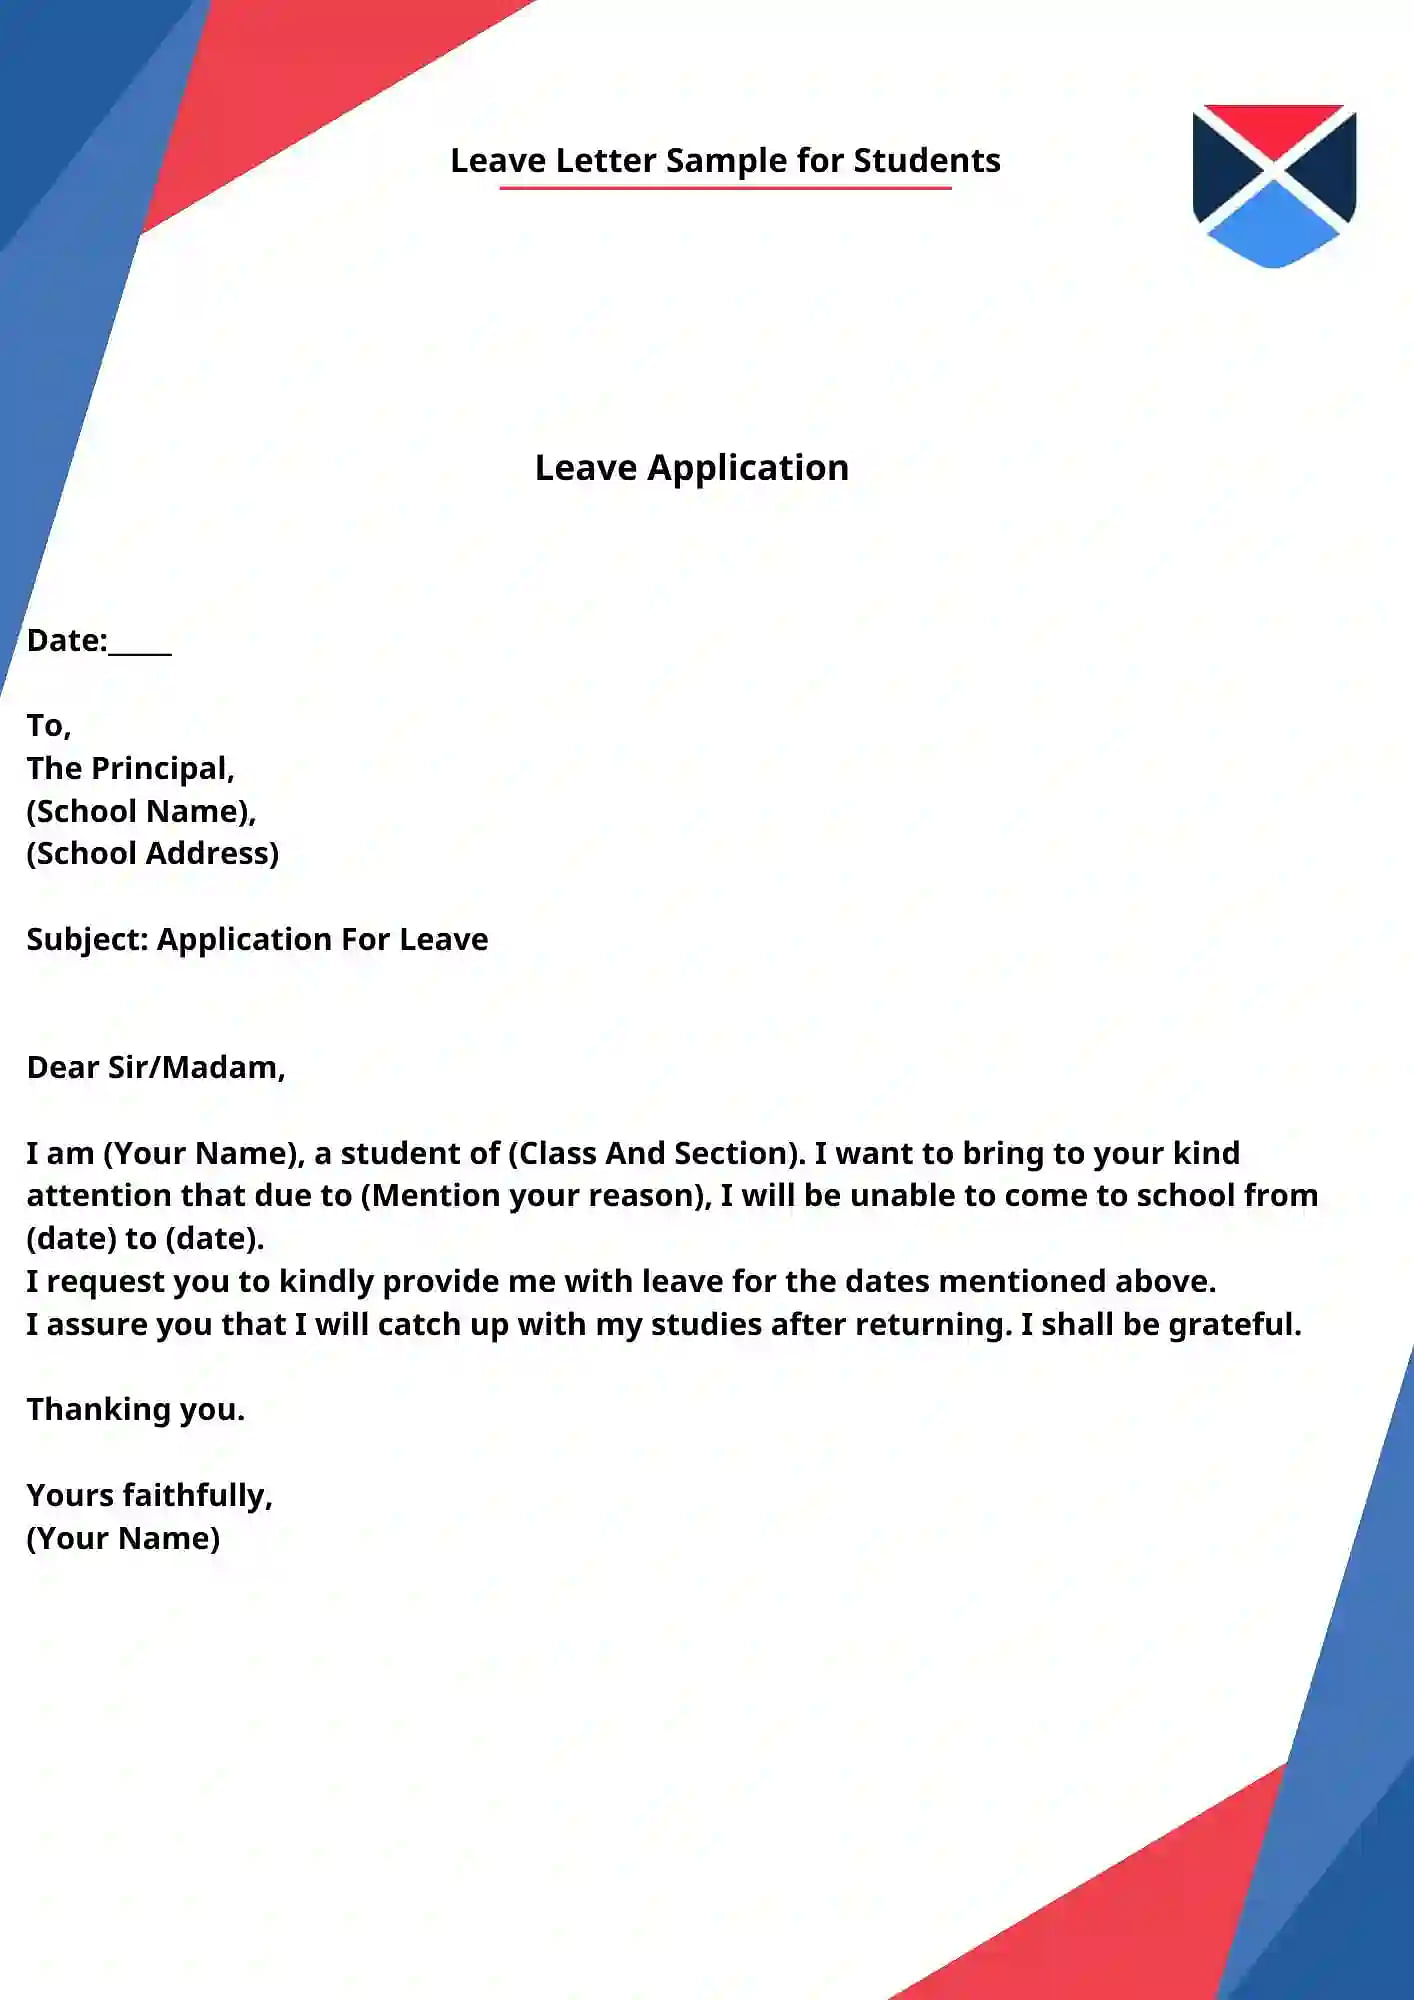 application letter in school for leave